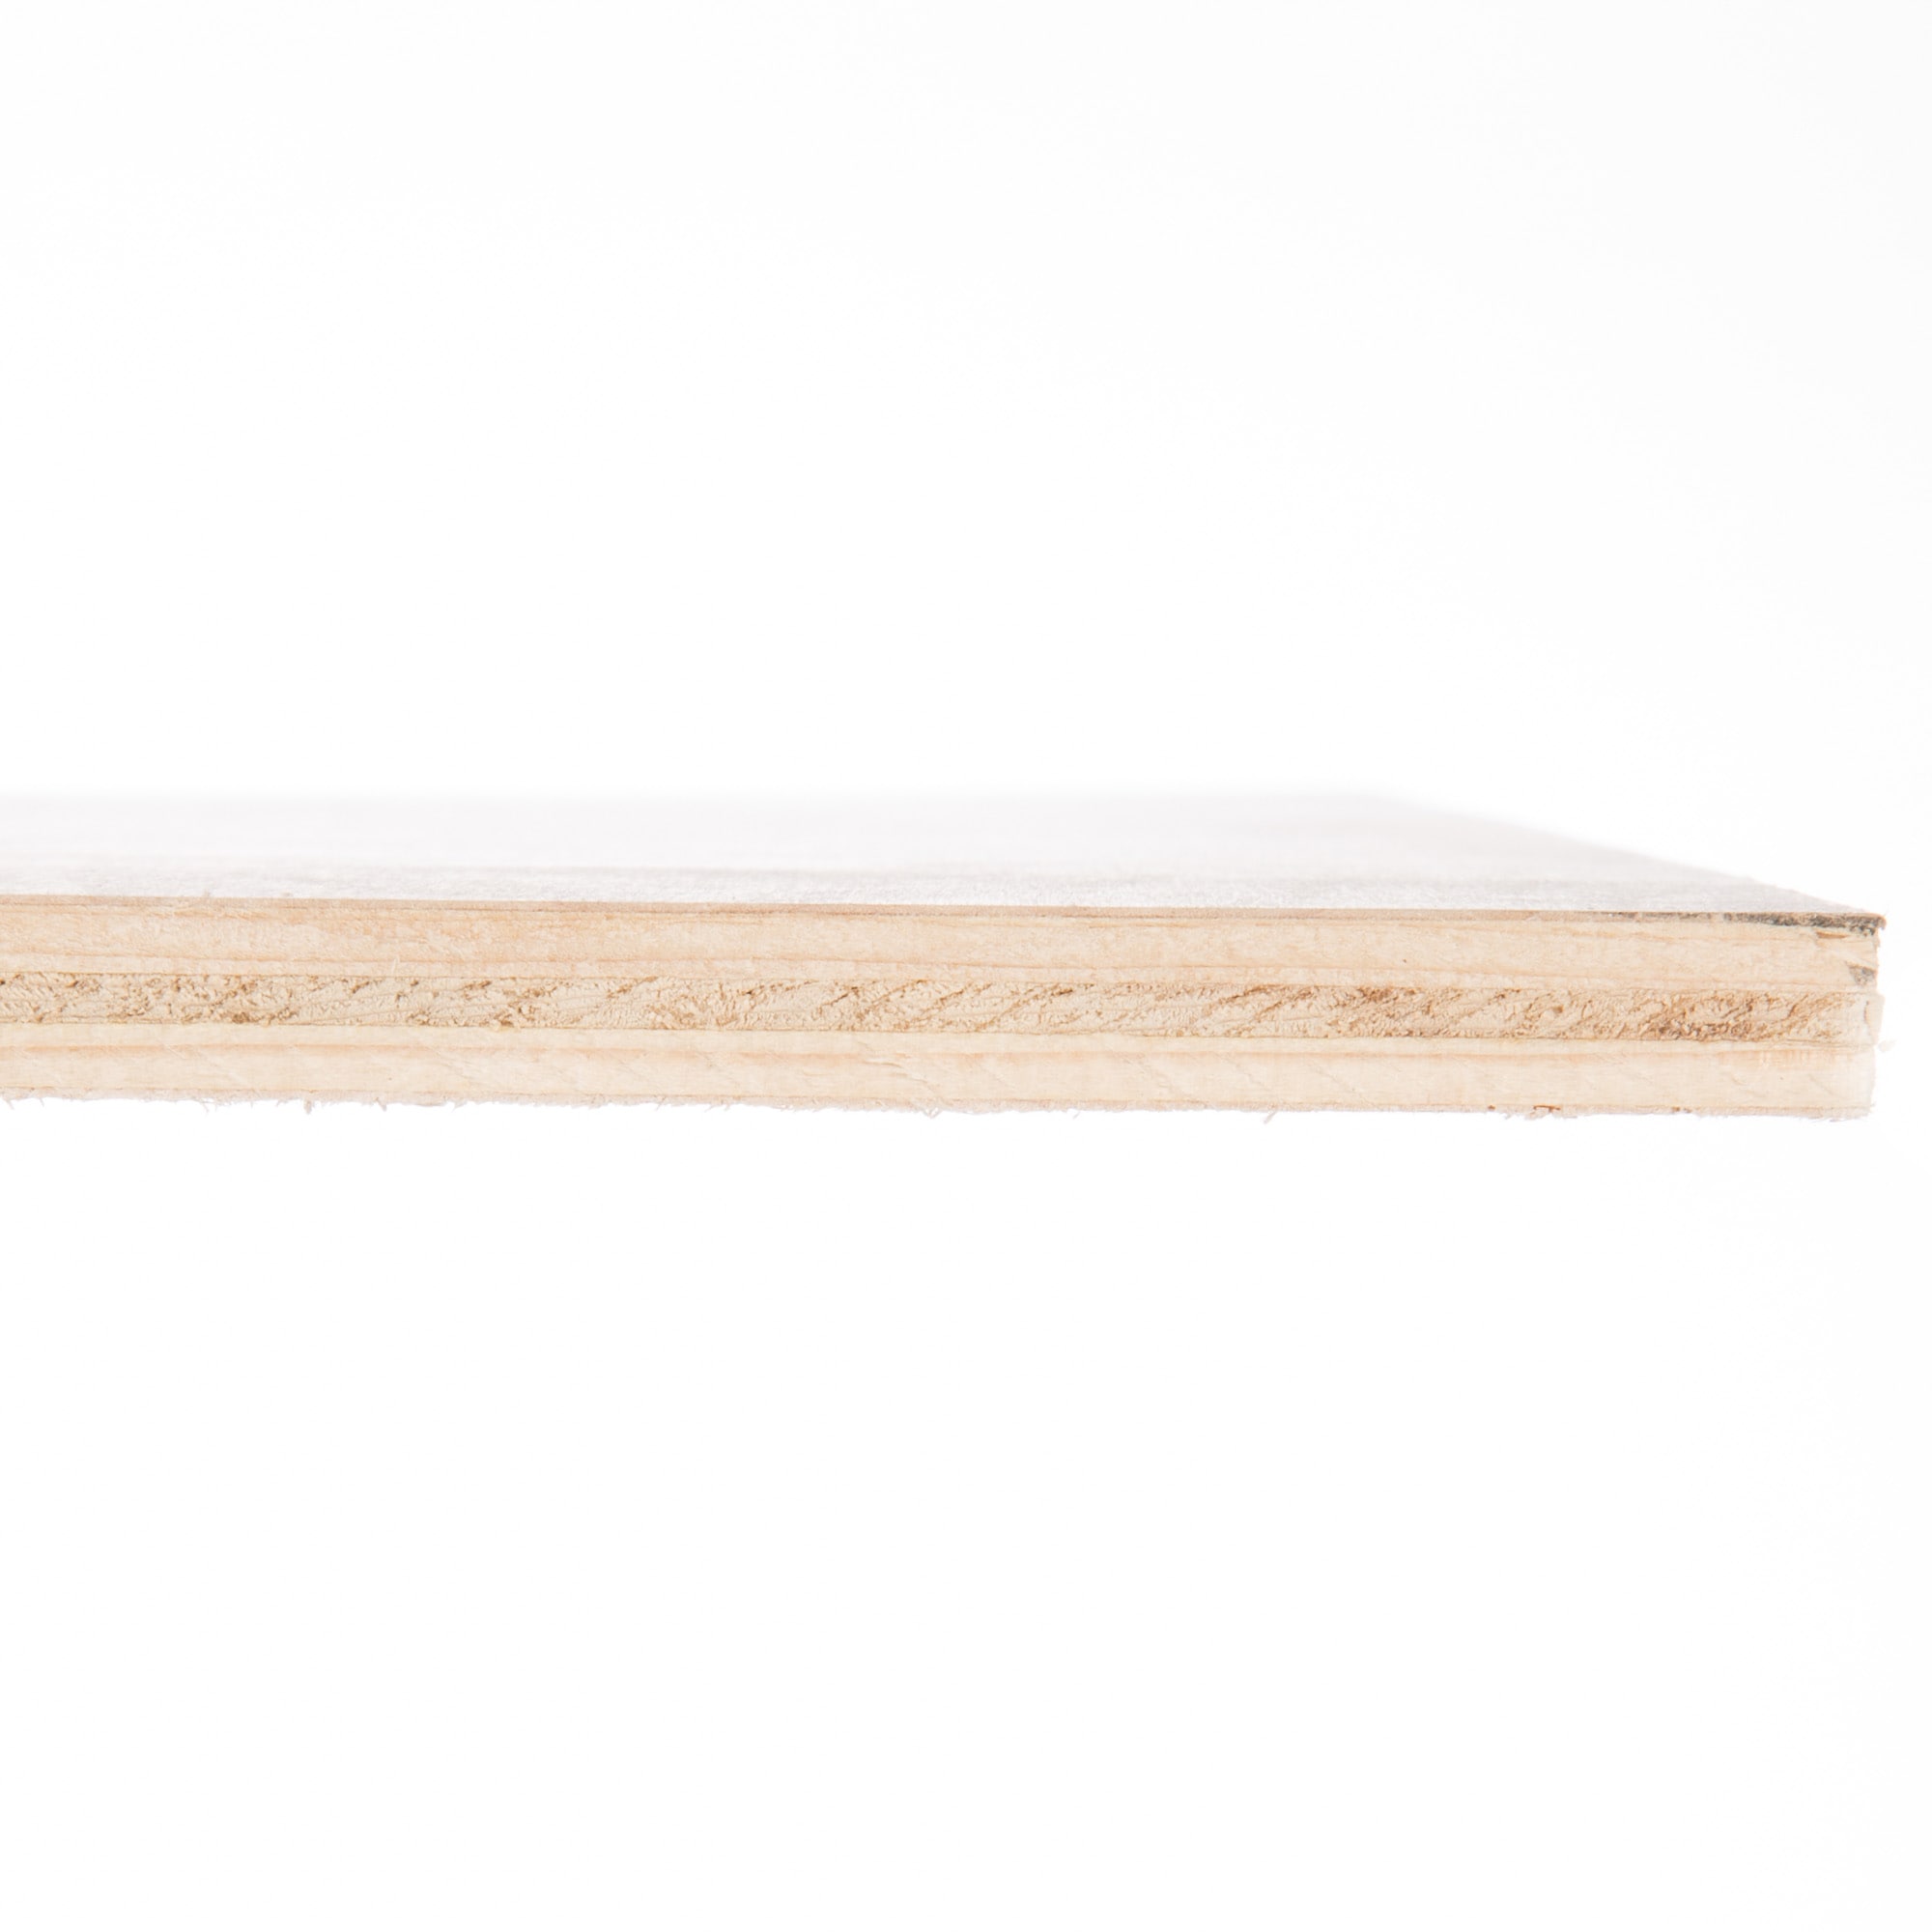 Cloverdale Band-It 3/4 In. x 8 Ft. White Birch Wood Veneer Edging -  Pittsfield, MA - Dettinger Lumber